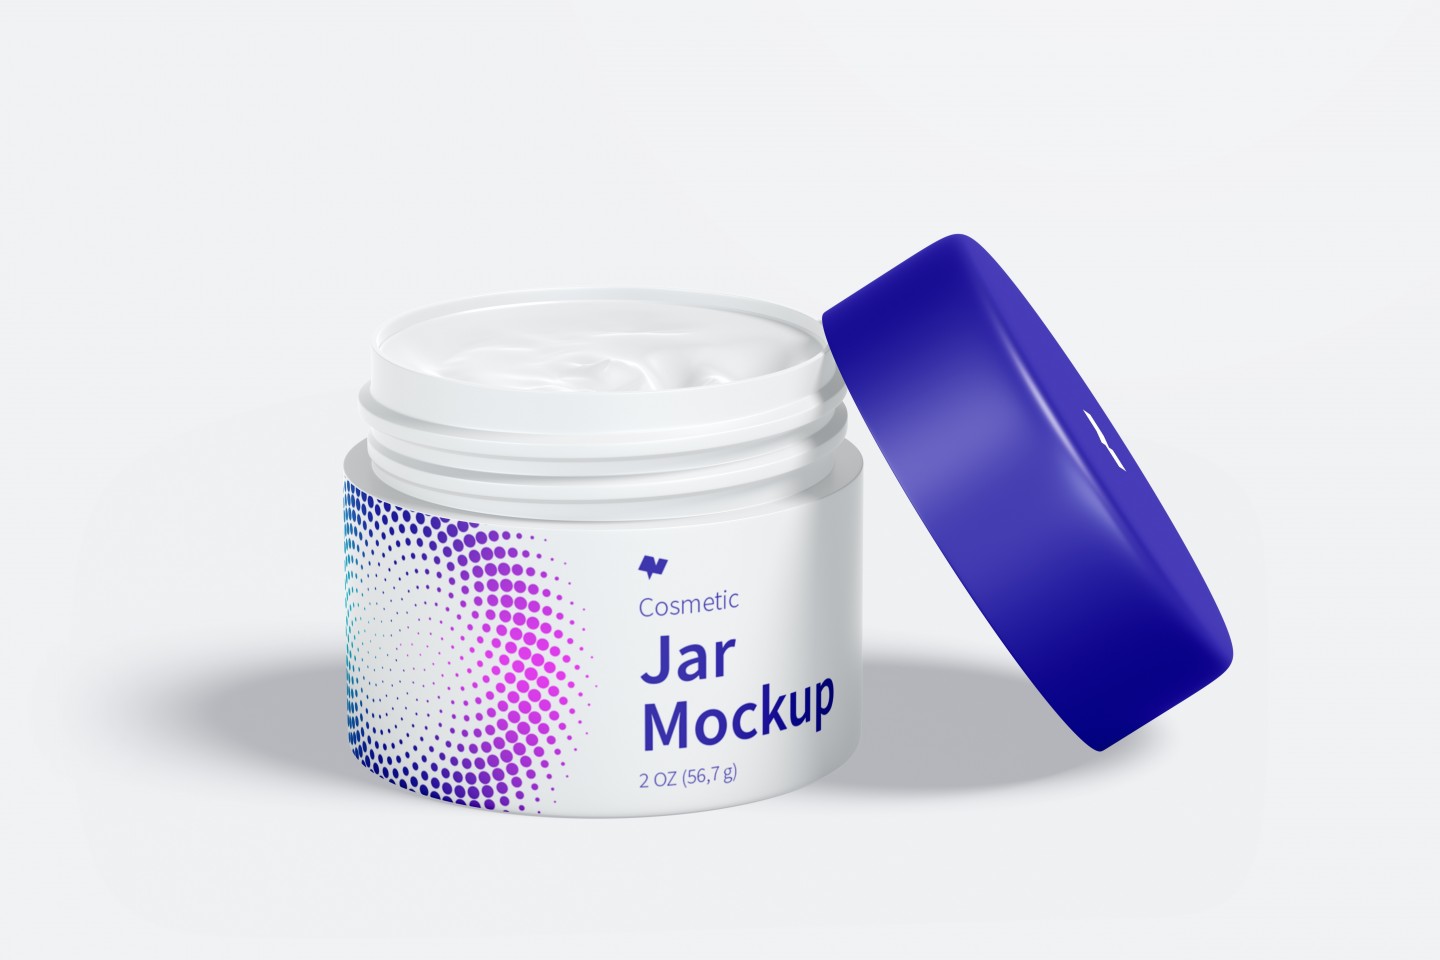 Cosmetic Jar Mockup 01